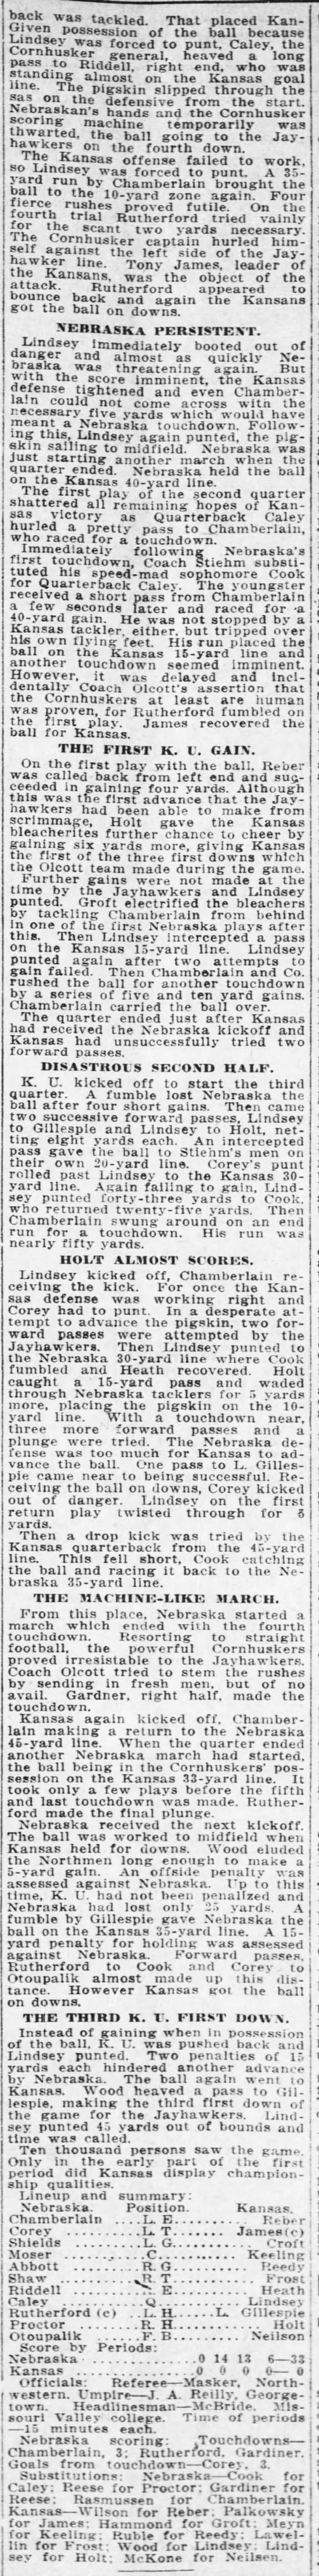 1915 Nebraska-Kansas football, Topeka Daily Capital, part 2 - 